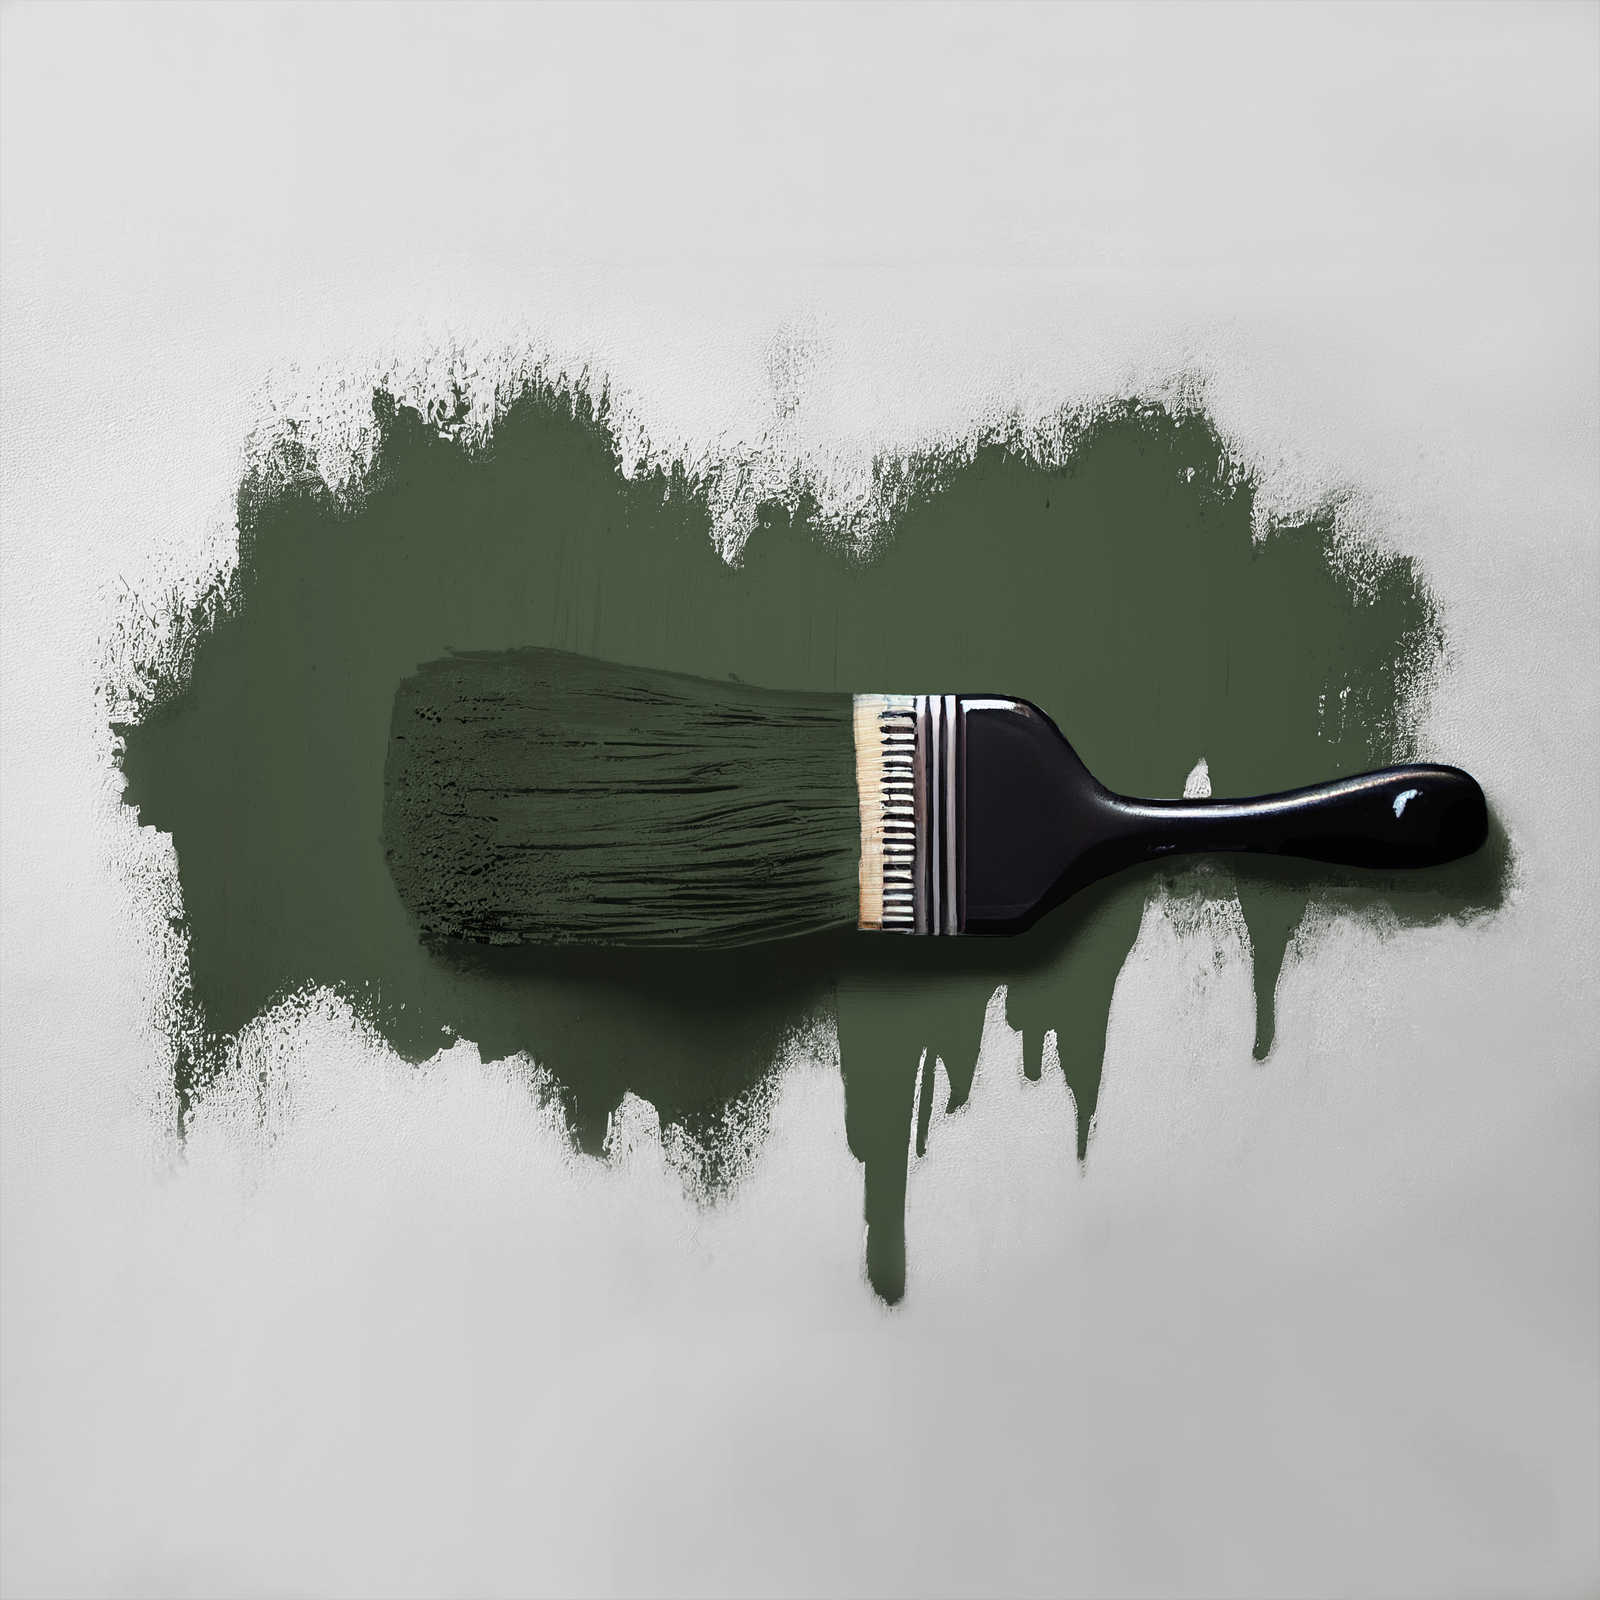             Pintura mural TCK4006 »Zippy Zuchini« en verde oscuro intensivo – 2,5 litro
        